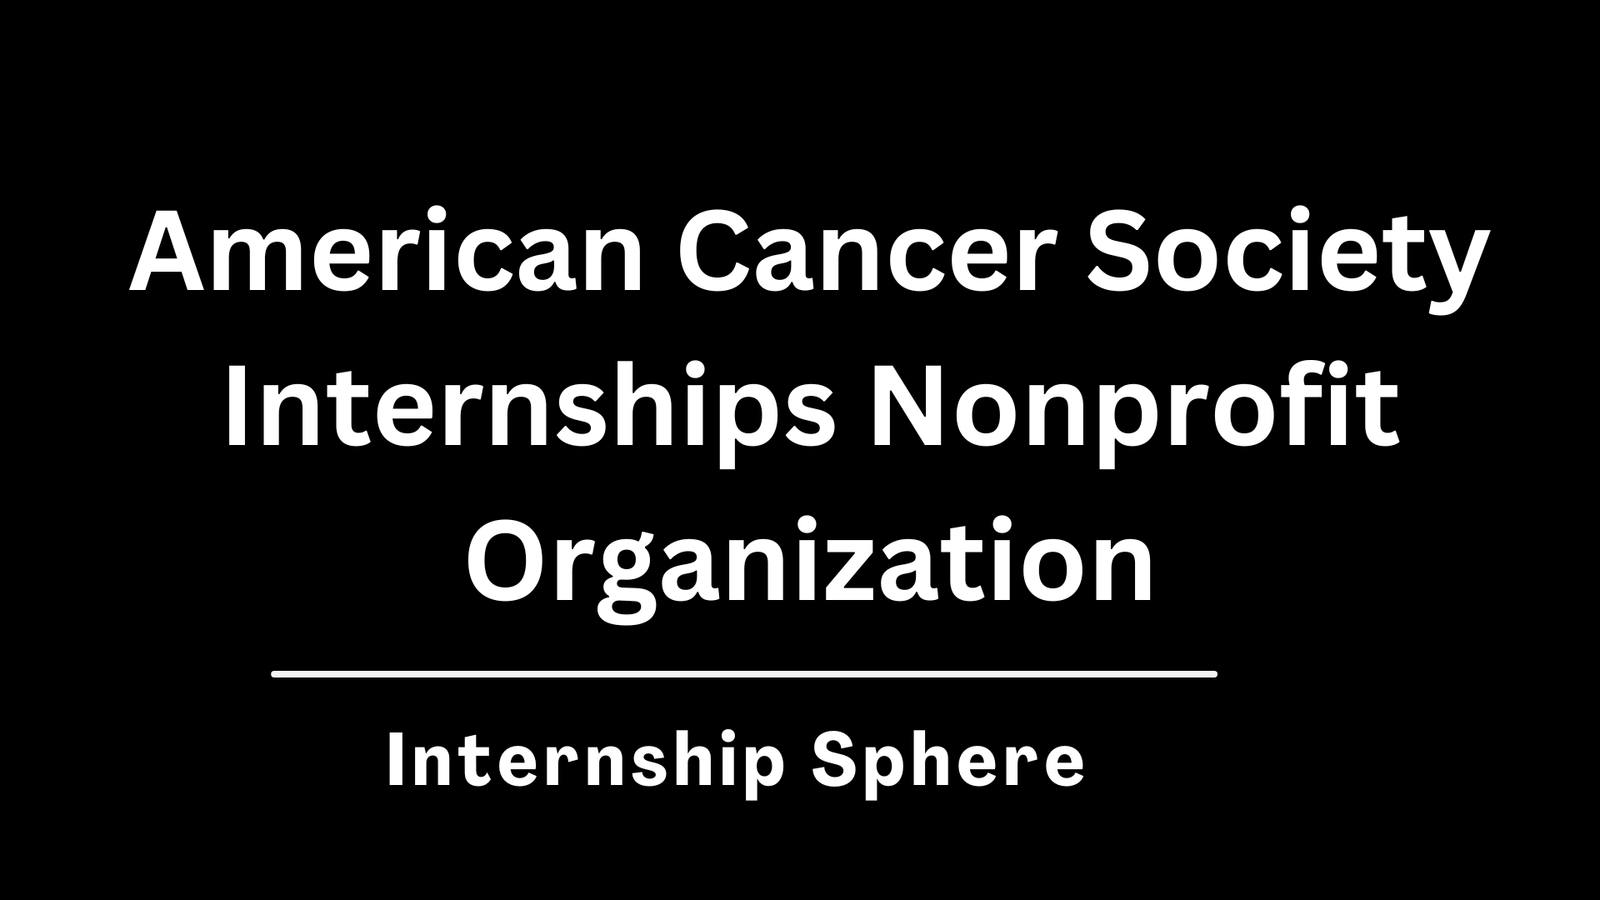 American Cancer Society Internships